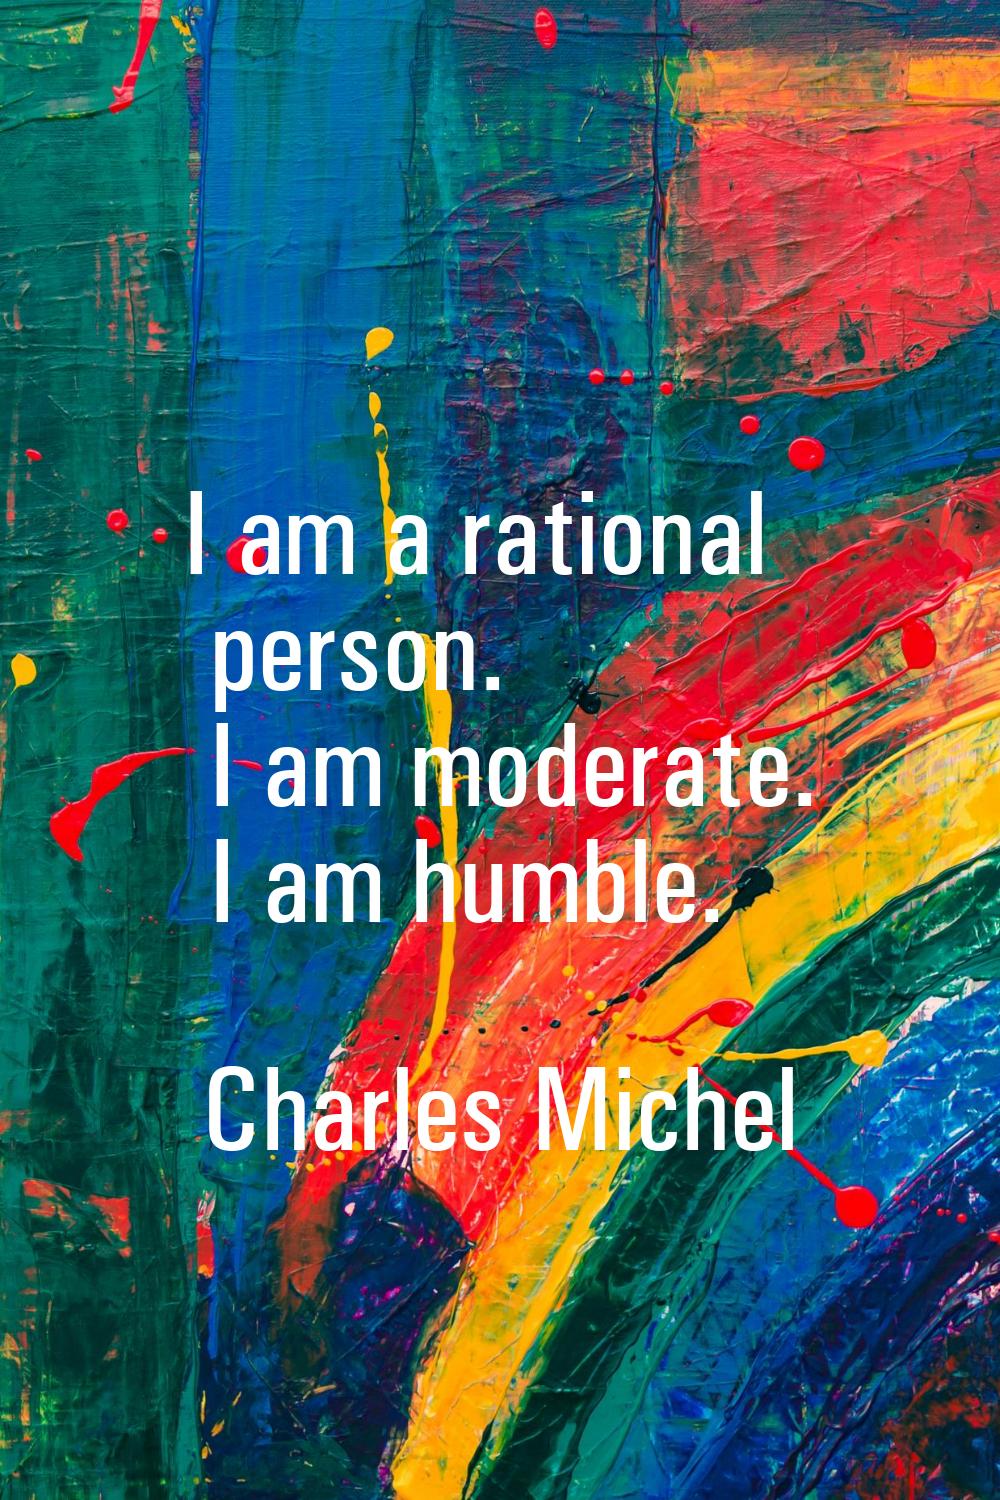 I am a rational person. I am moderate. I am humble.